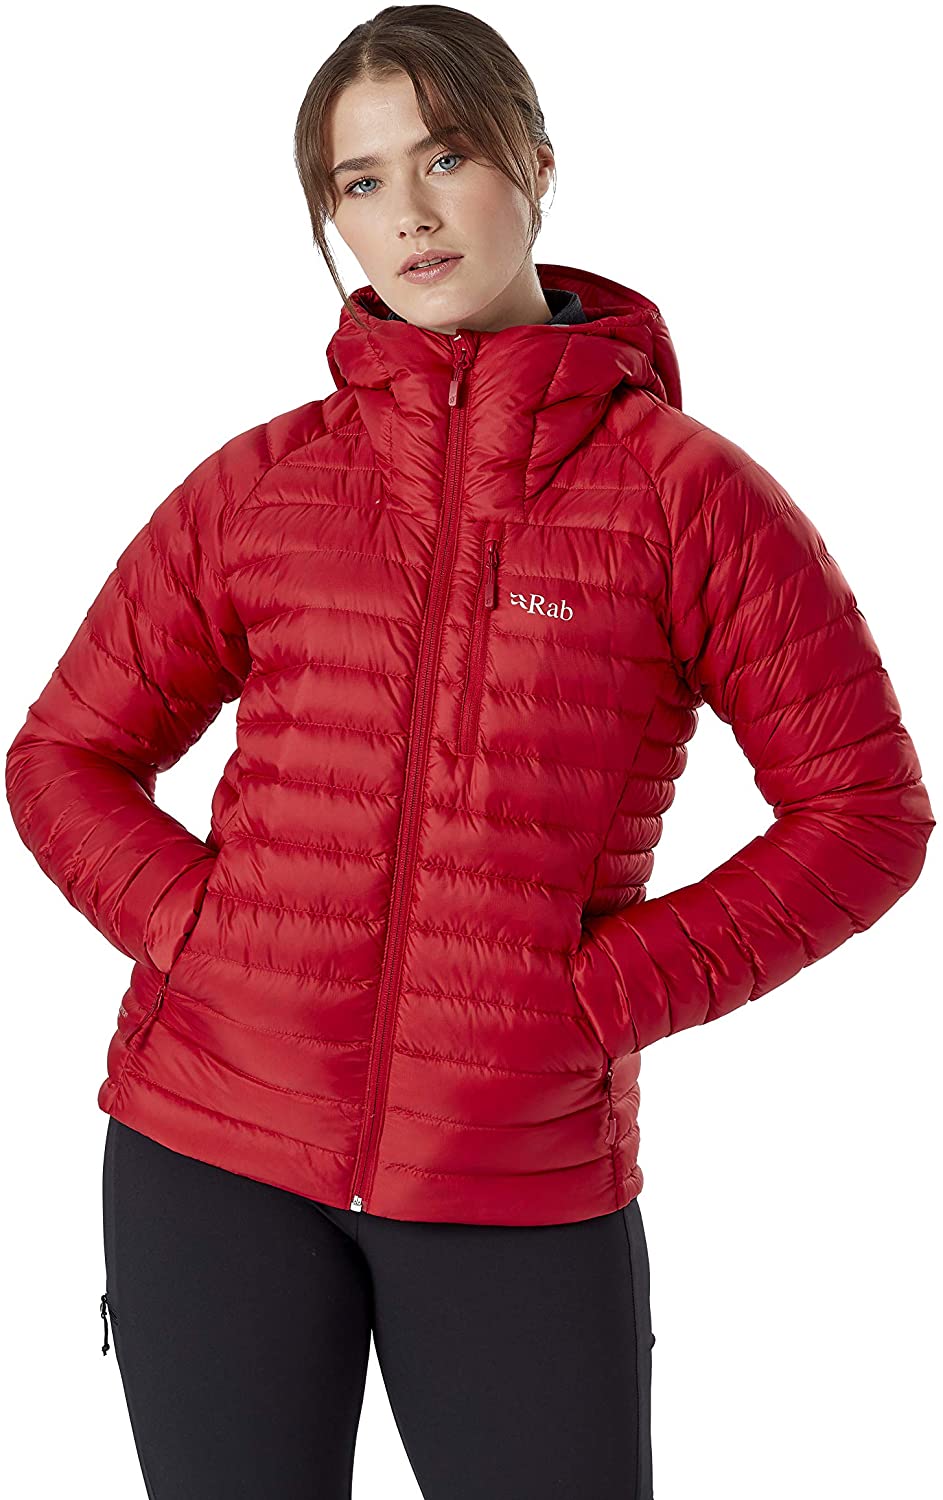 Sober climb Inspire Camping & Hiking Clothing RAB Womens Black Microlight Alpine Insulated  Hooded Jacket Ladies UK 8 BNWT RO2655194